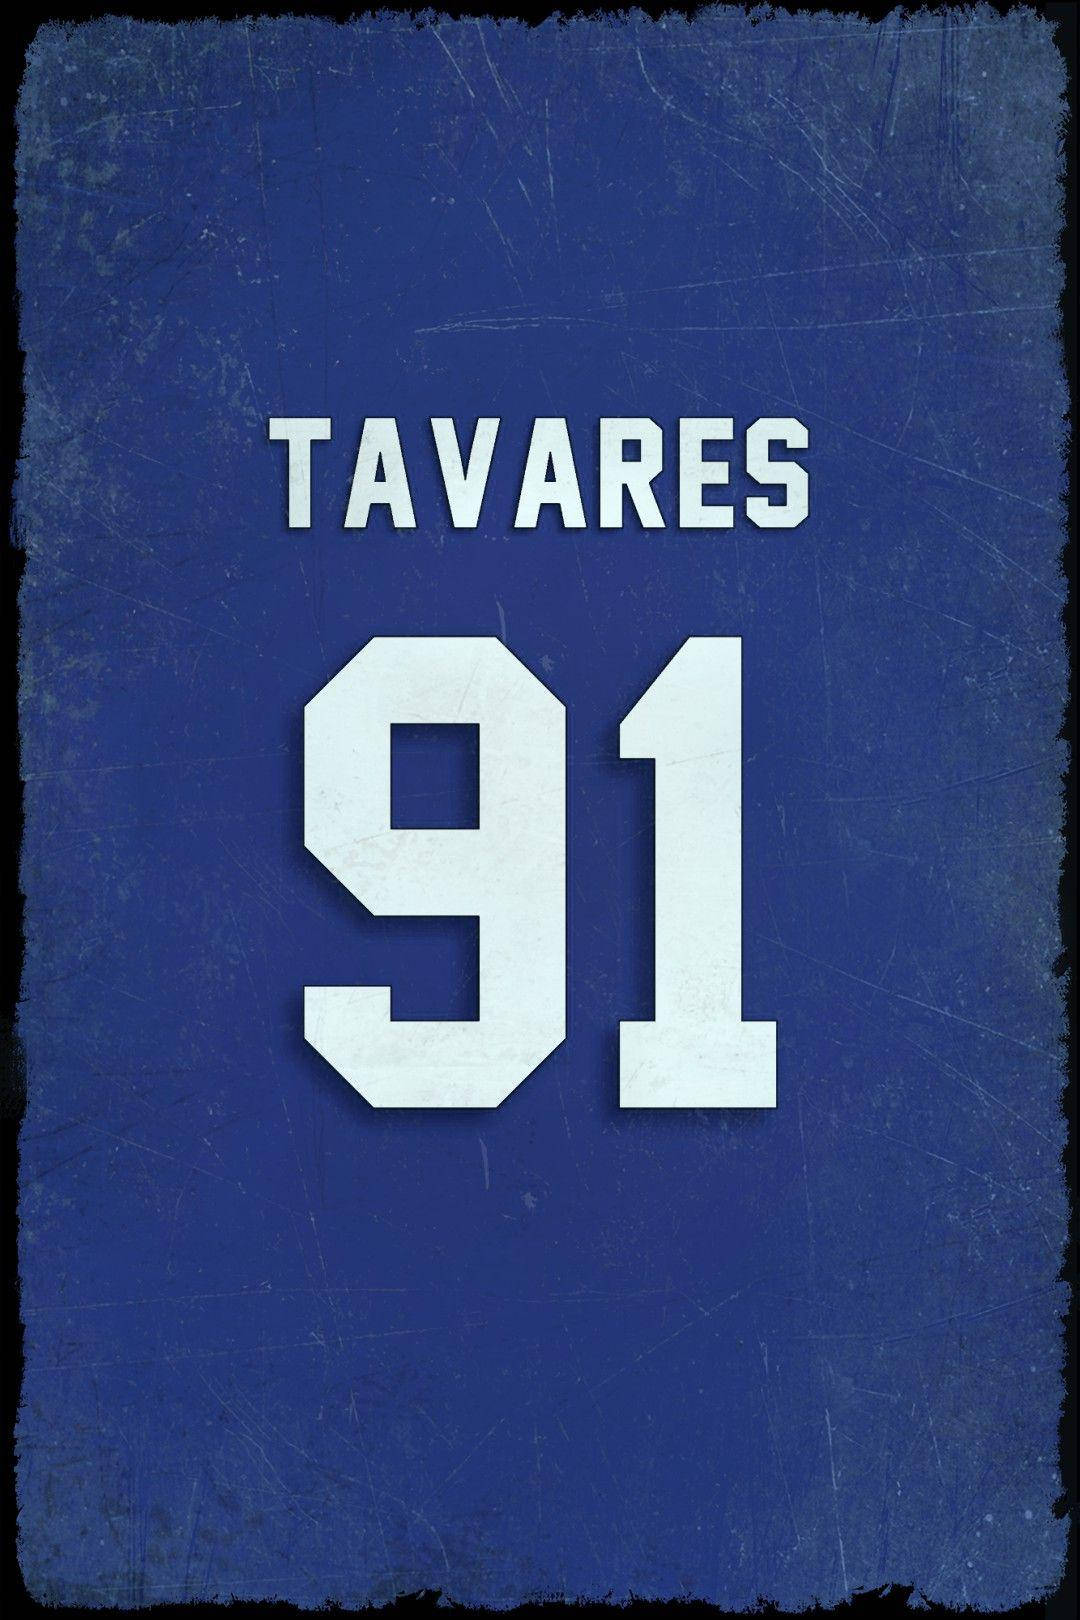 John Tavares Number 91 Wallpaper